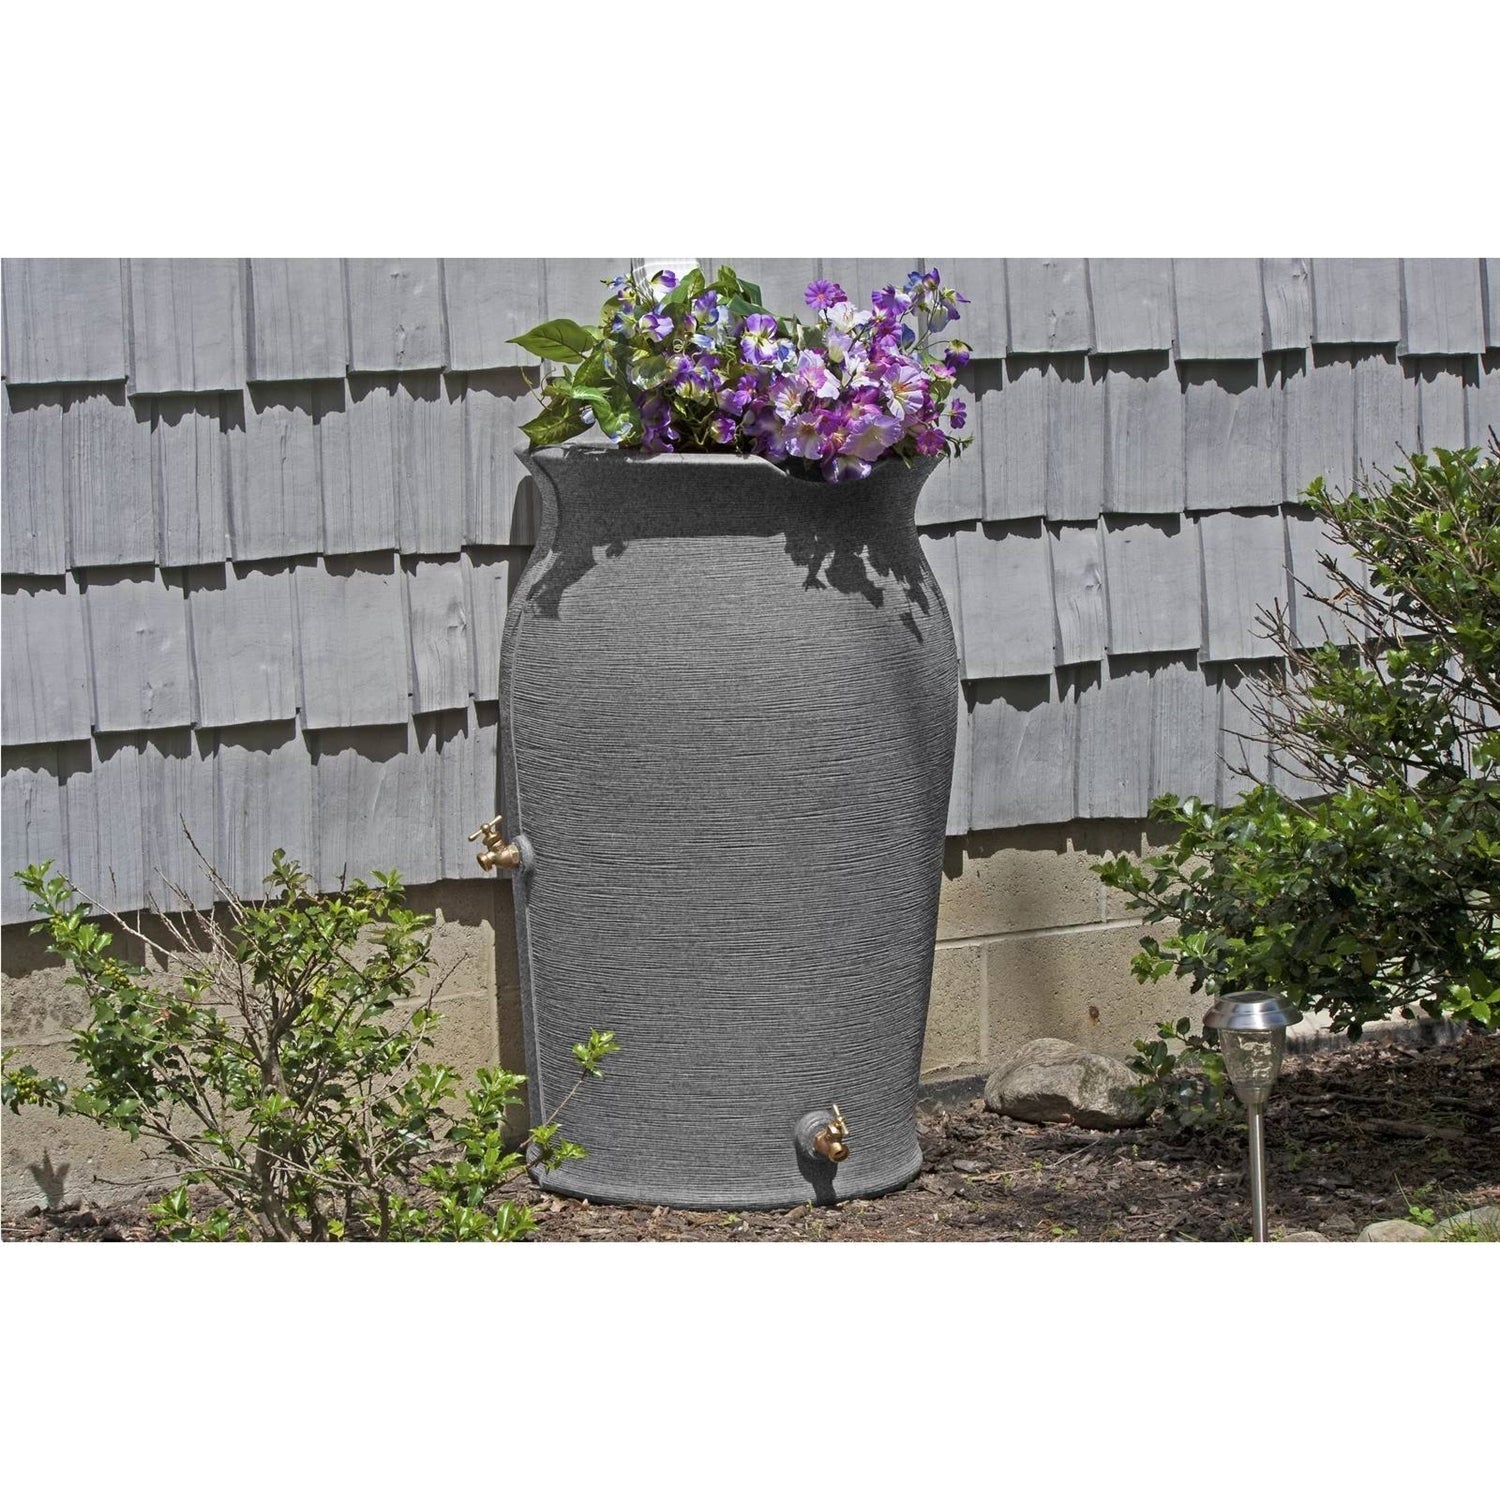 Outdoor > Gardening > Rain Barrels - Dark Grey Granite 50-Gallon Plastic Urn Rain Barrel With Planter Top